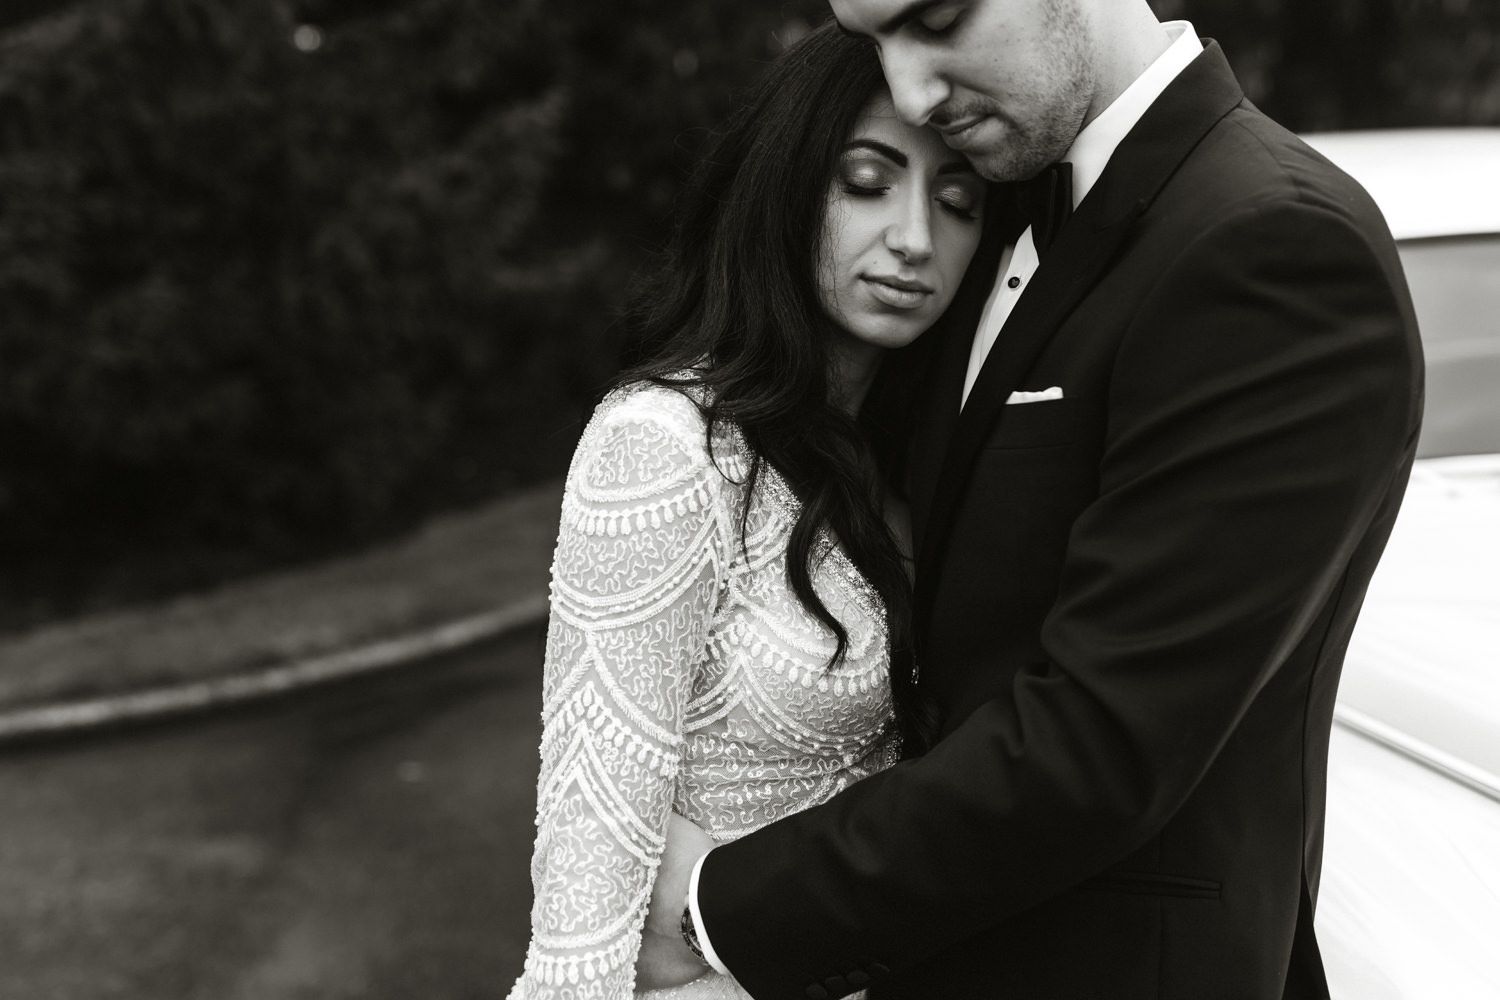 black and white wedding portrait